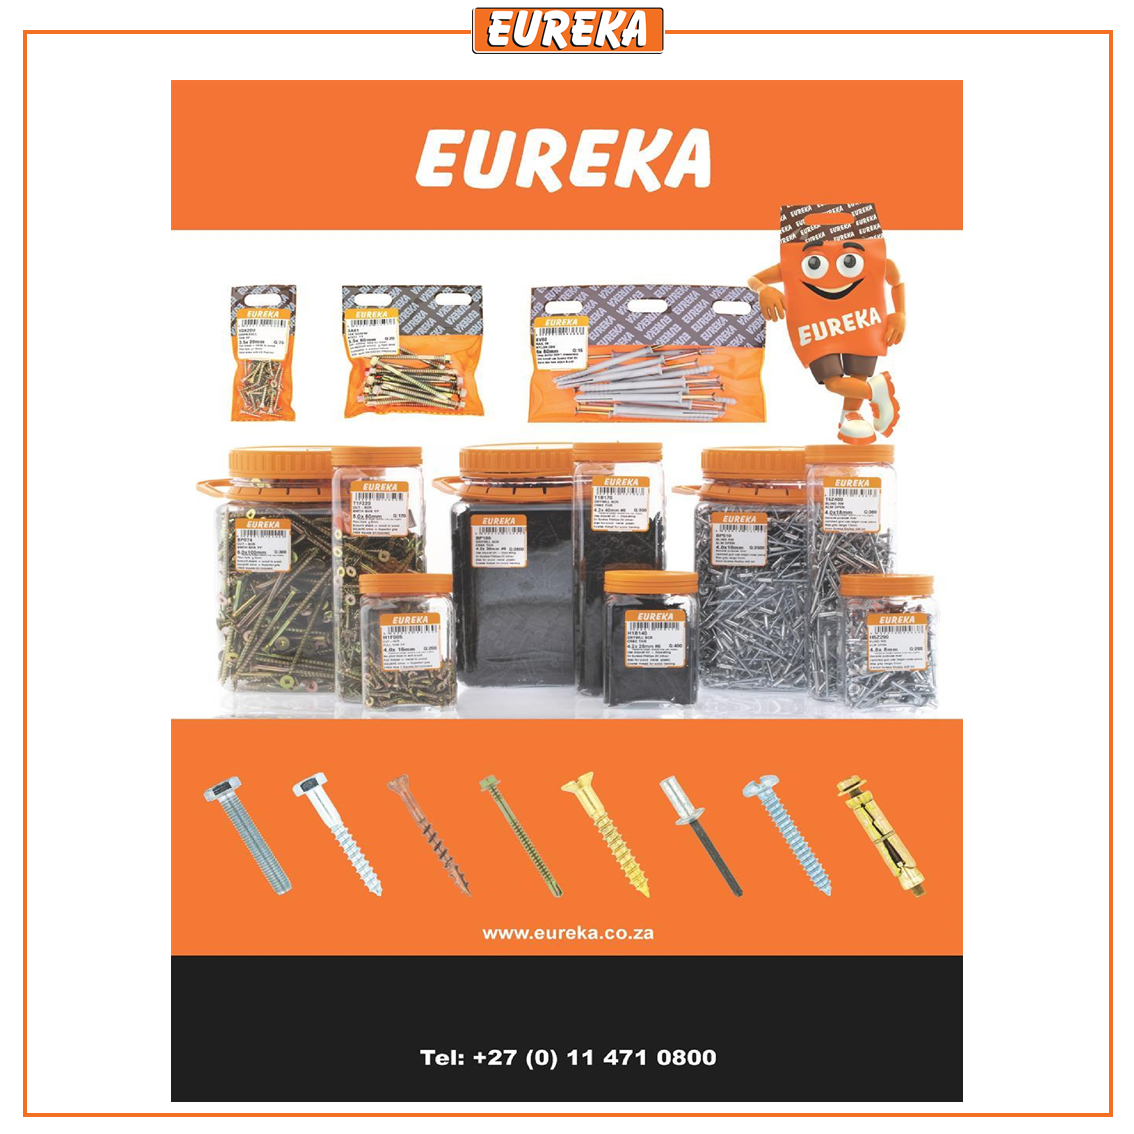 EUREKA - Catalogue Catalogue